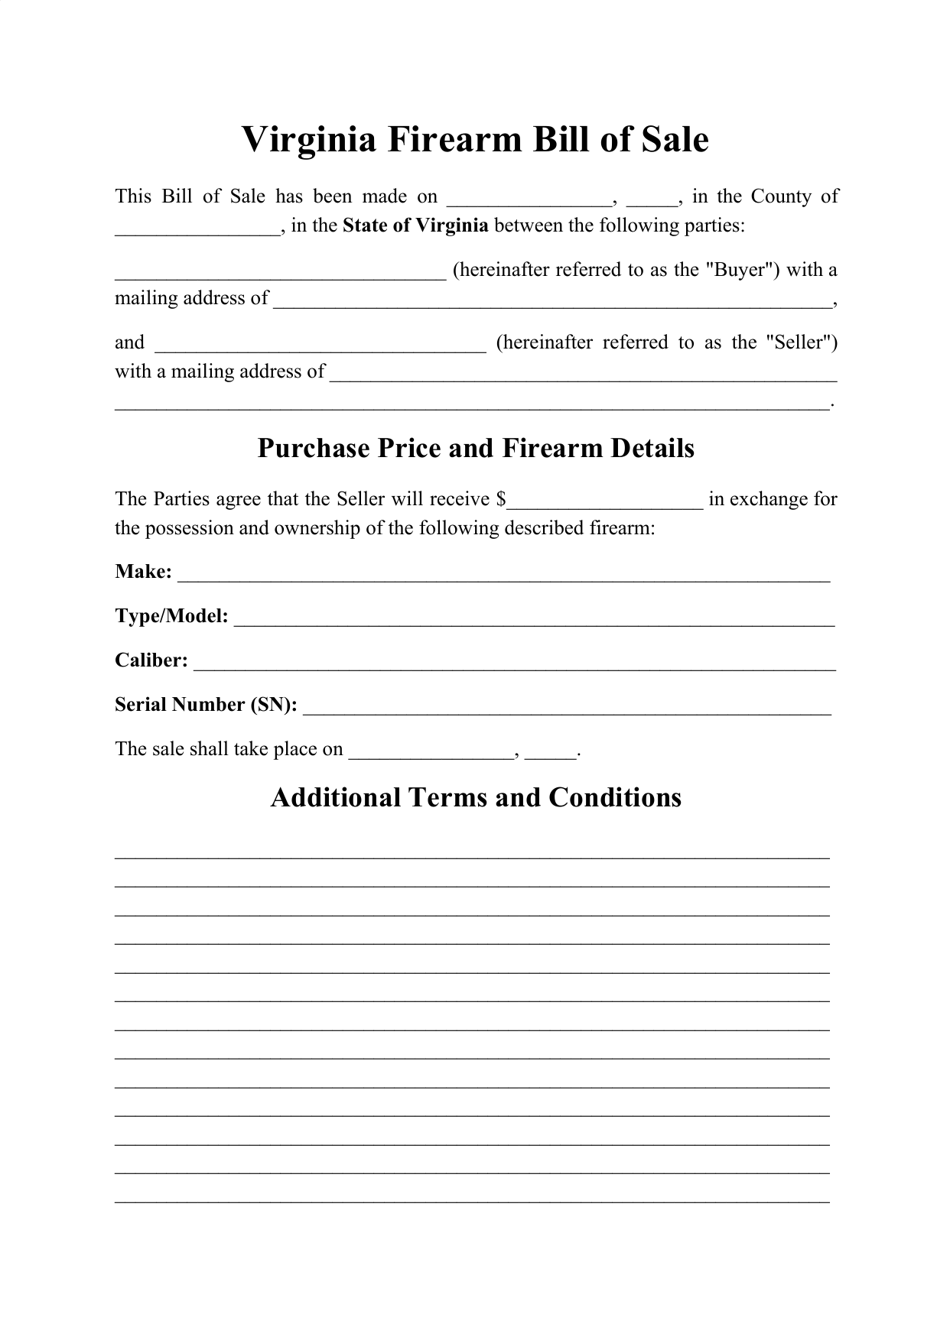 Virginia Firearm Bill of Sale Form Download Printable PDF